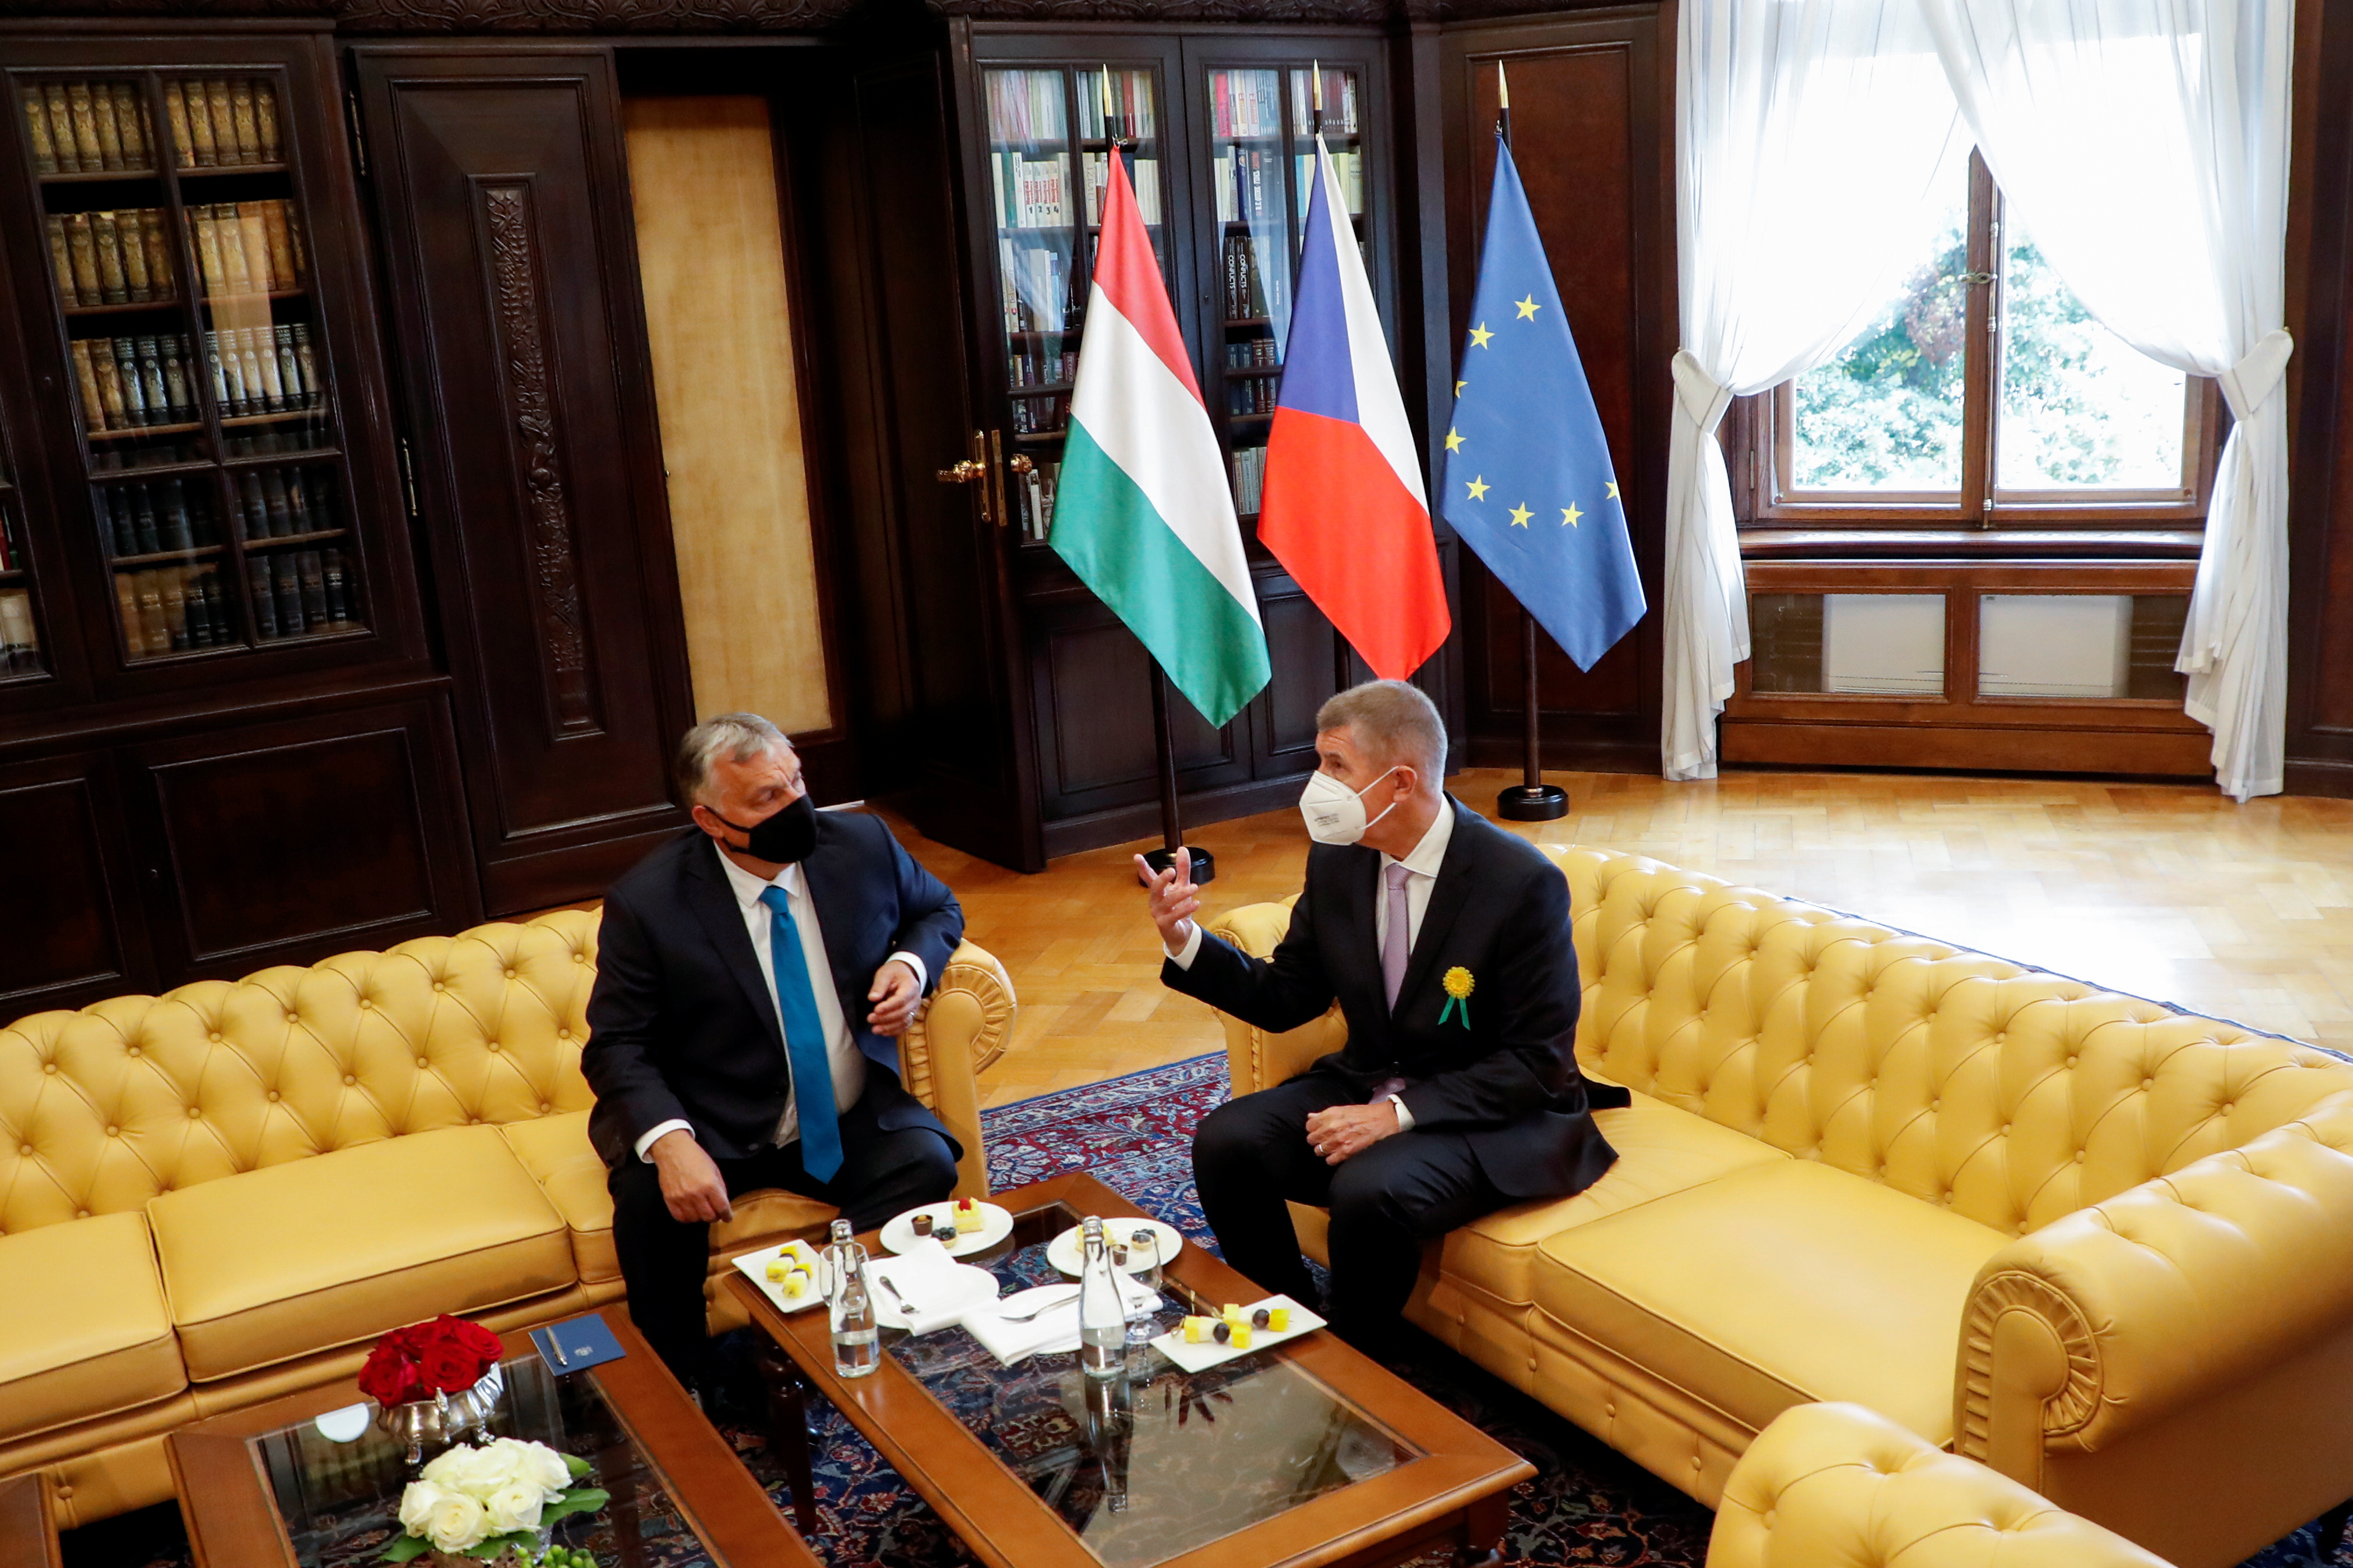 Czech Republic's Prime Minister Andrej Babis meets with Hungary's Prime Minister Viktor Orban at the Kramar's Villa in Prague, Czech Republic, September 29, 2021. REUTERS/David W Cerny